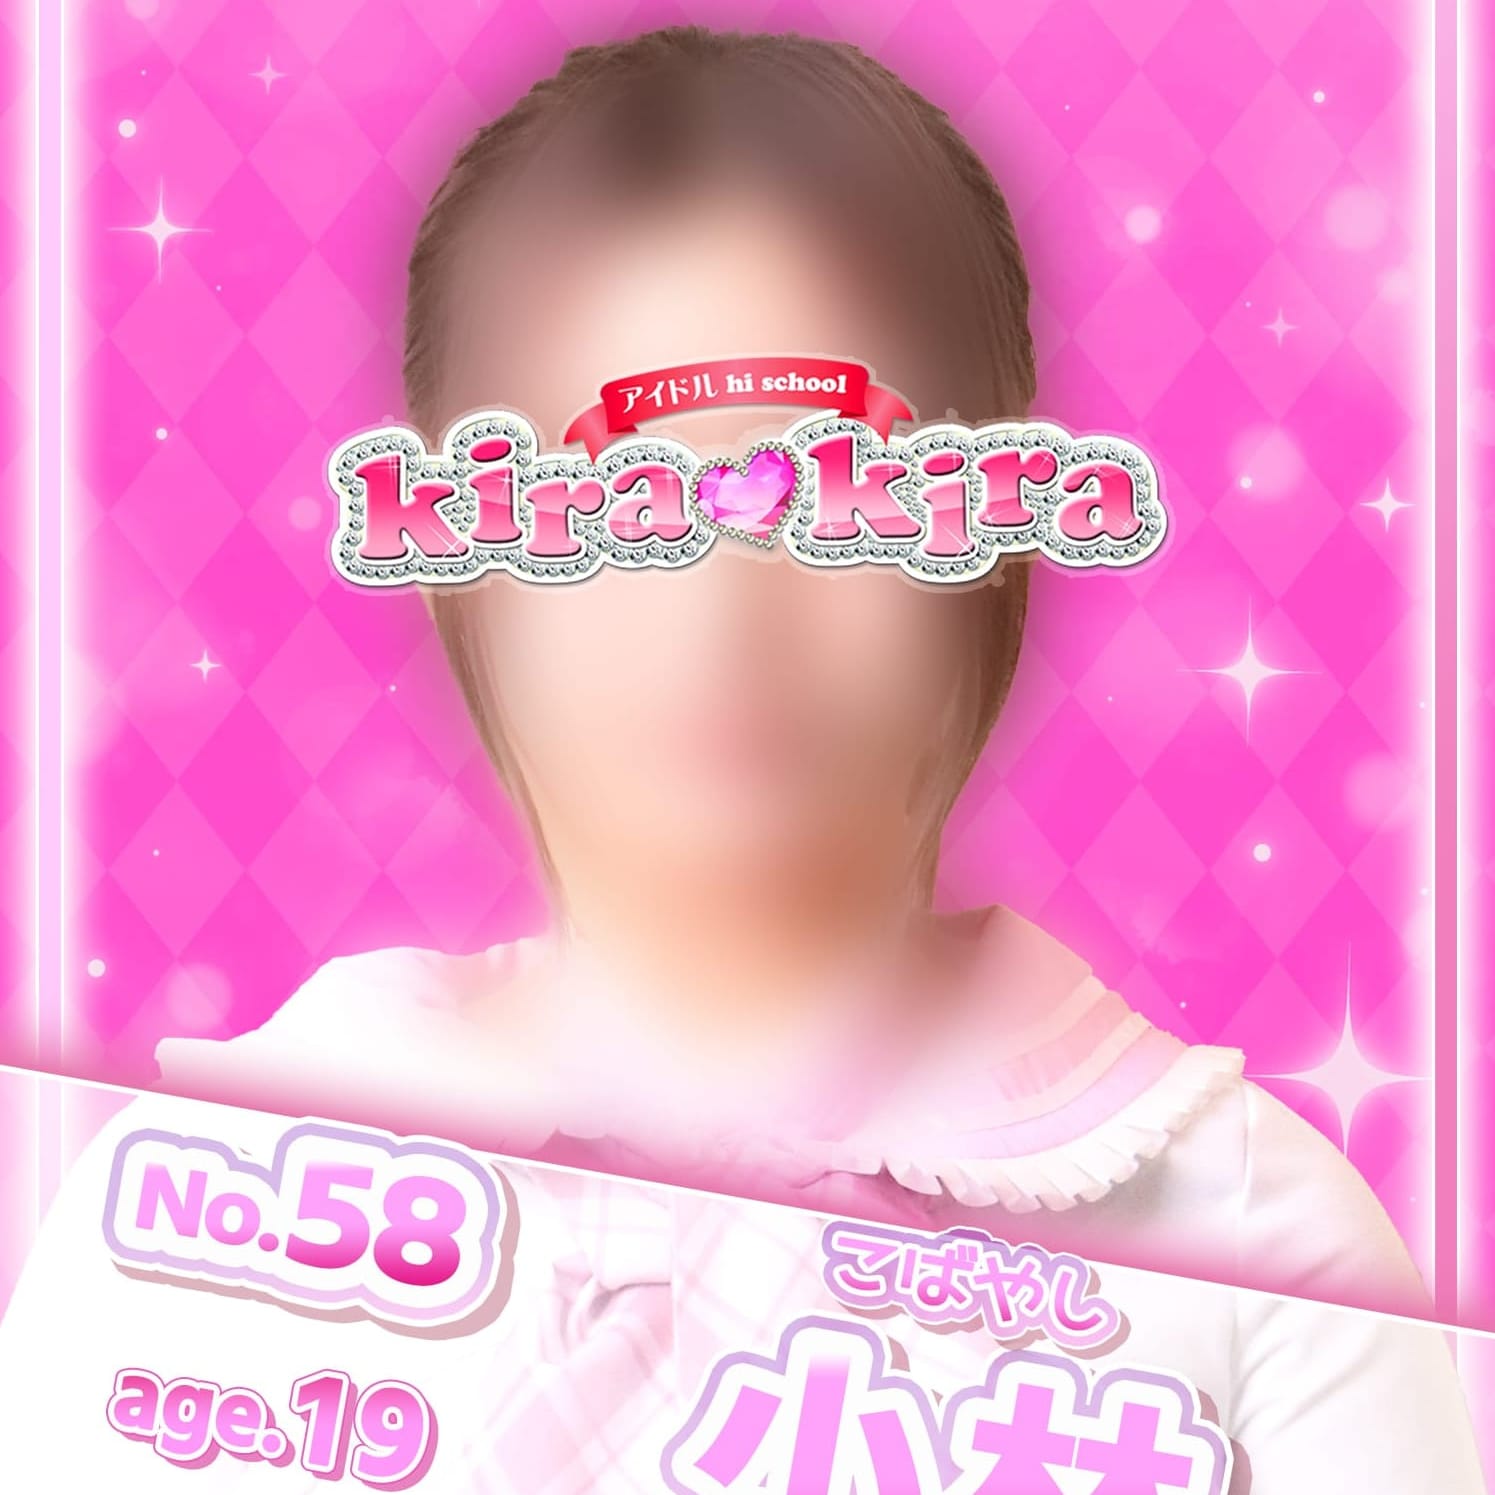 No.58 小林【純度100％のギャル☆】 | アイドル hi school KiraKira(大和)